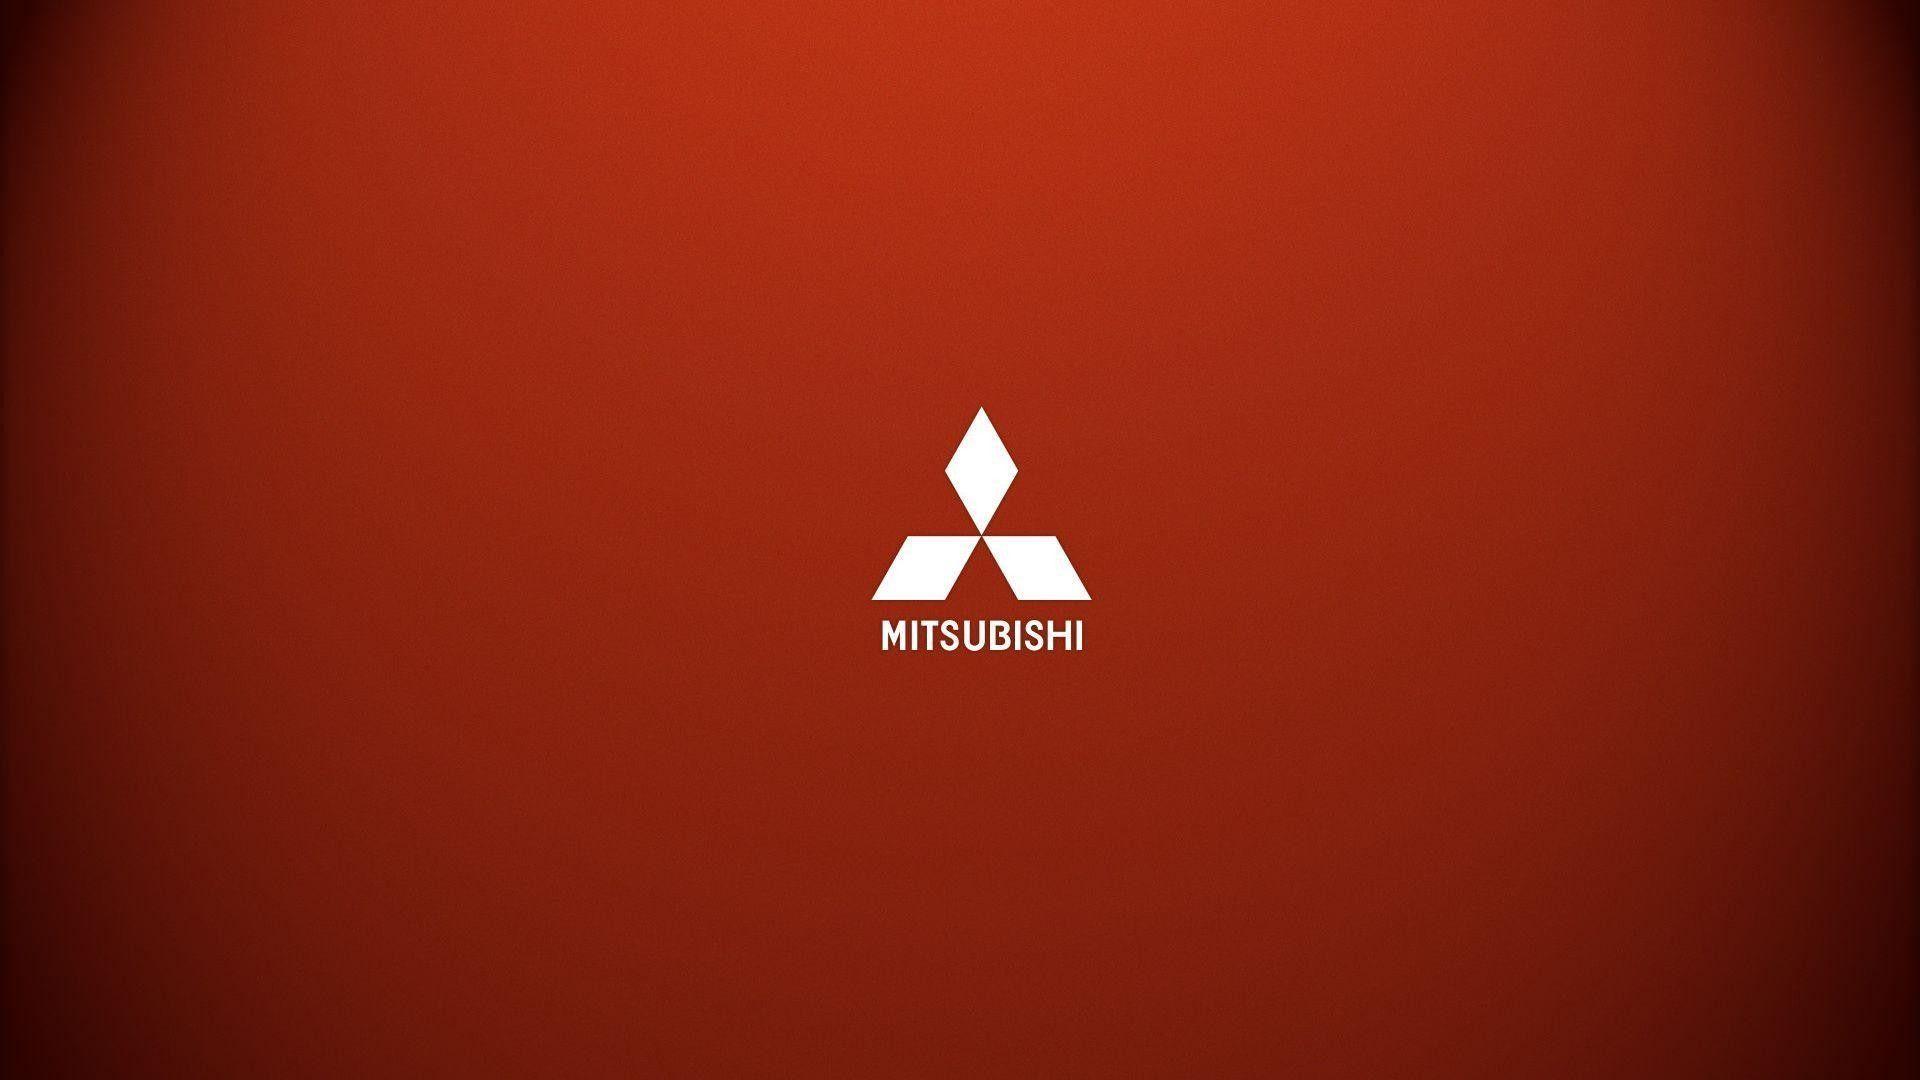 Mitsubishi Wallpapers Top Free Mitsubishi Backgrounds Wallpaperaccess